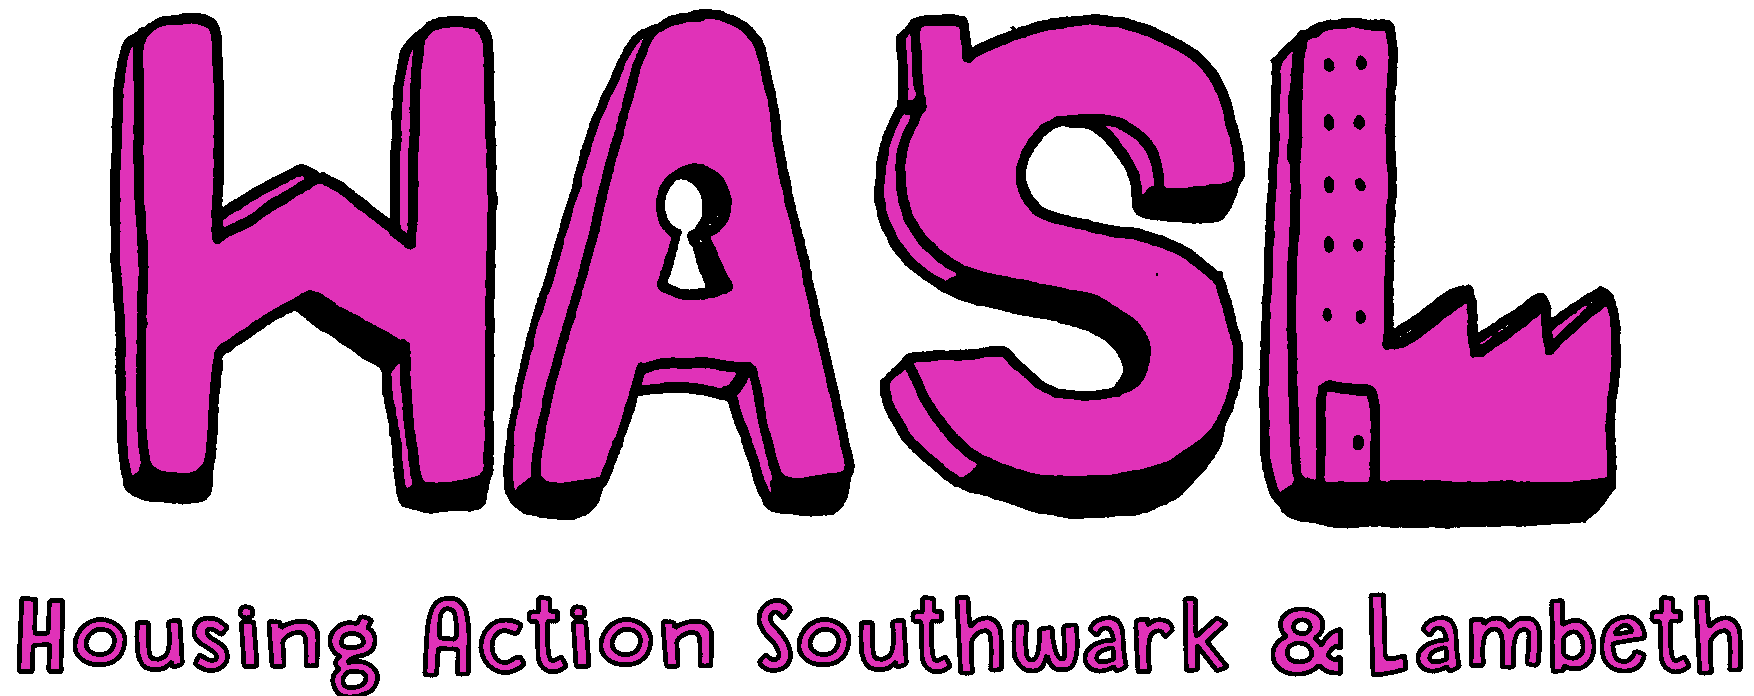 Housing Action Southwark & Lambeth